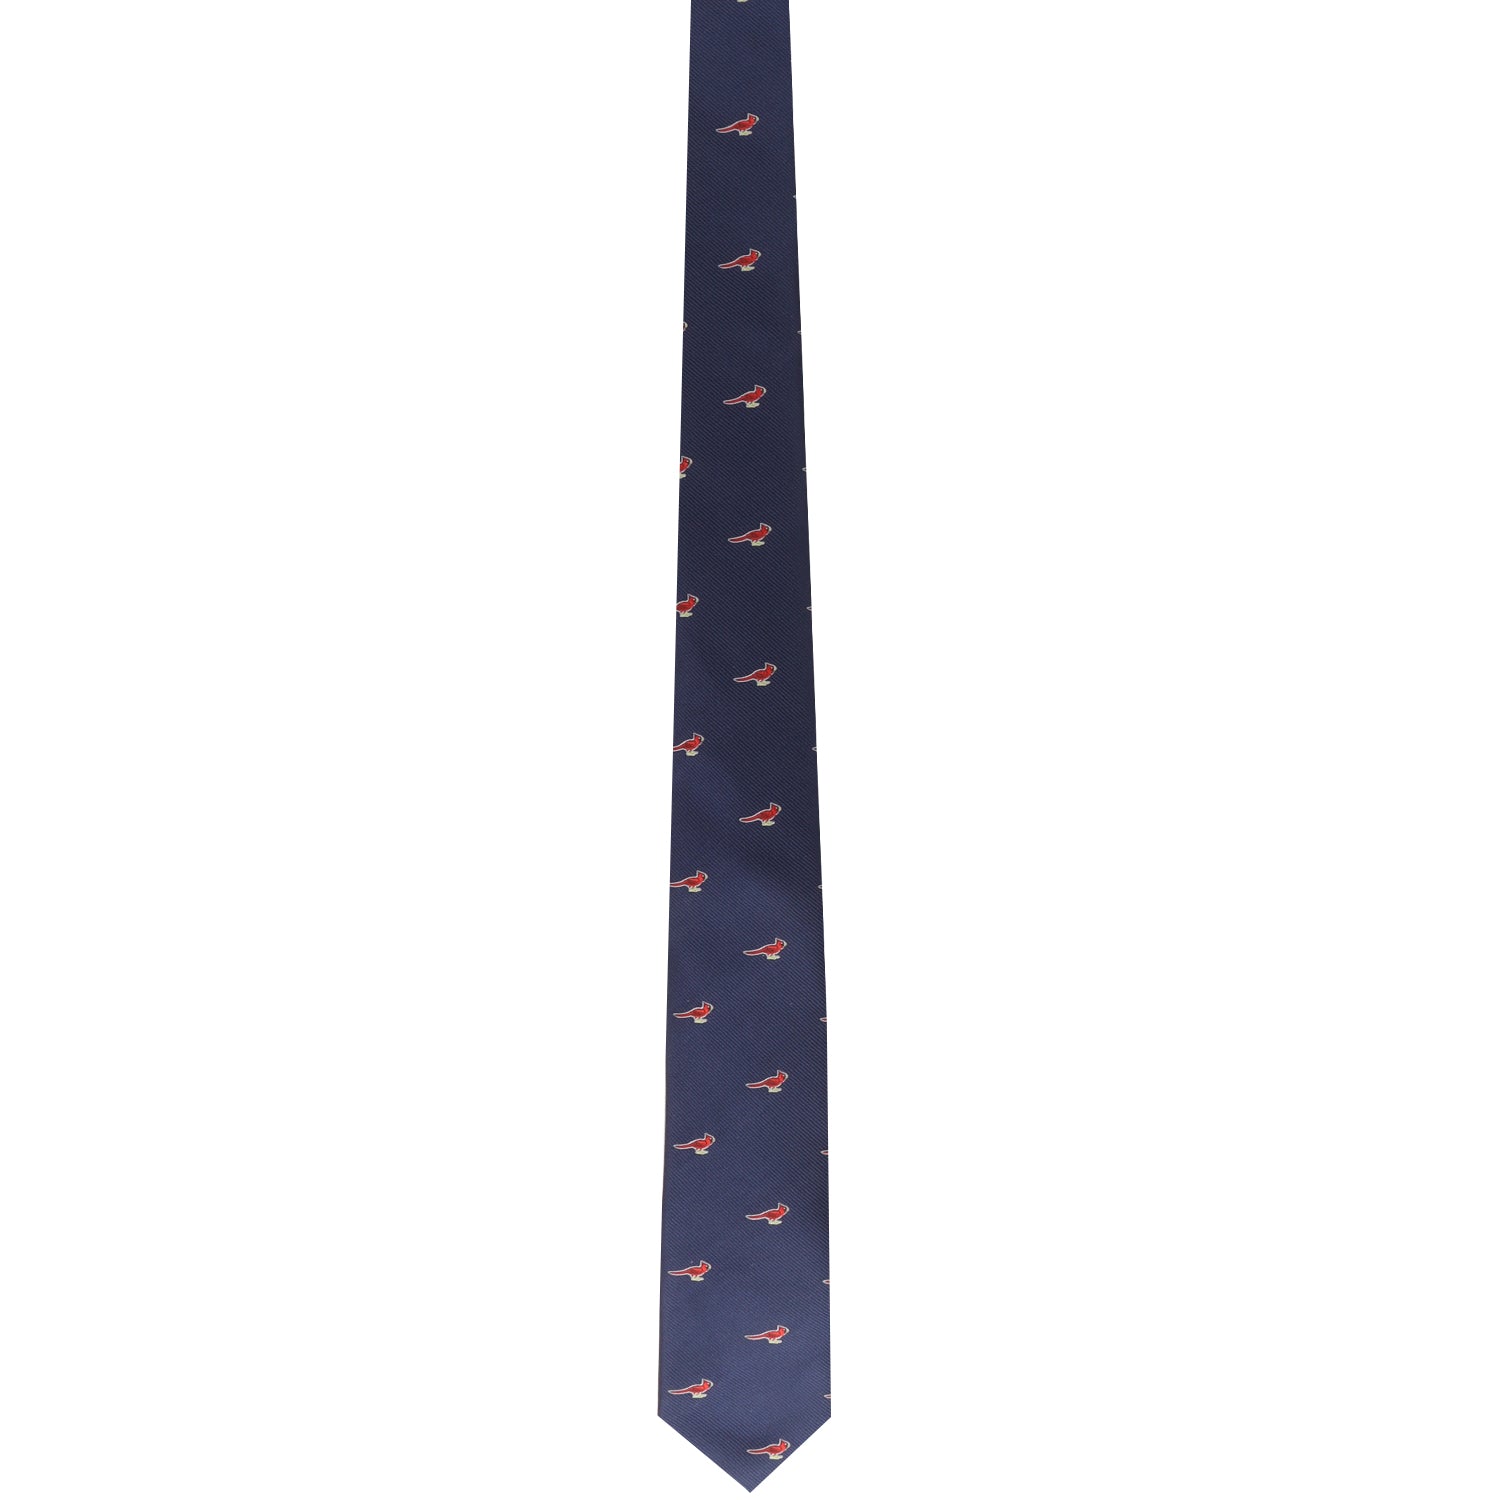 A blue tie with a Cardinal Bird Skinny Tie on it.